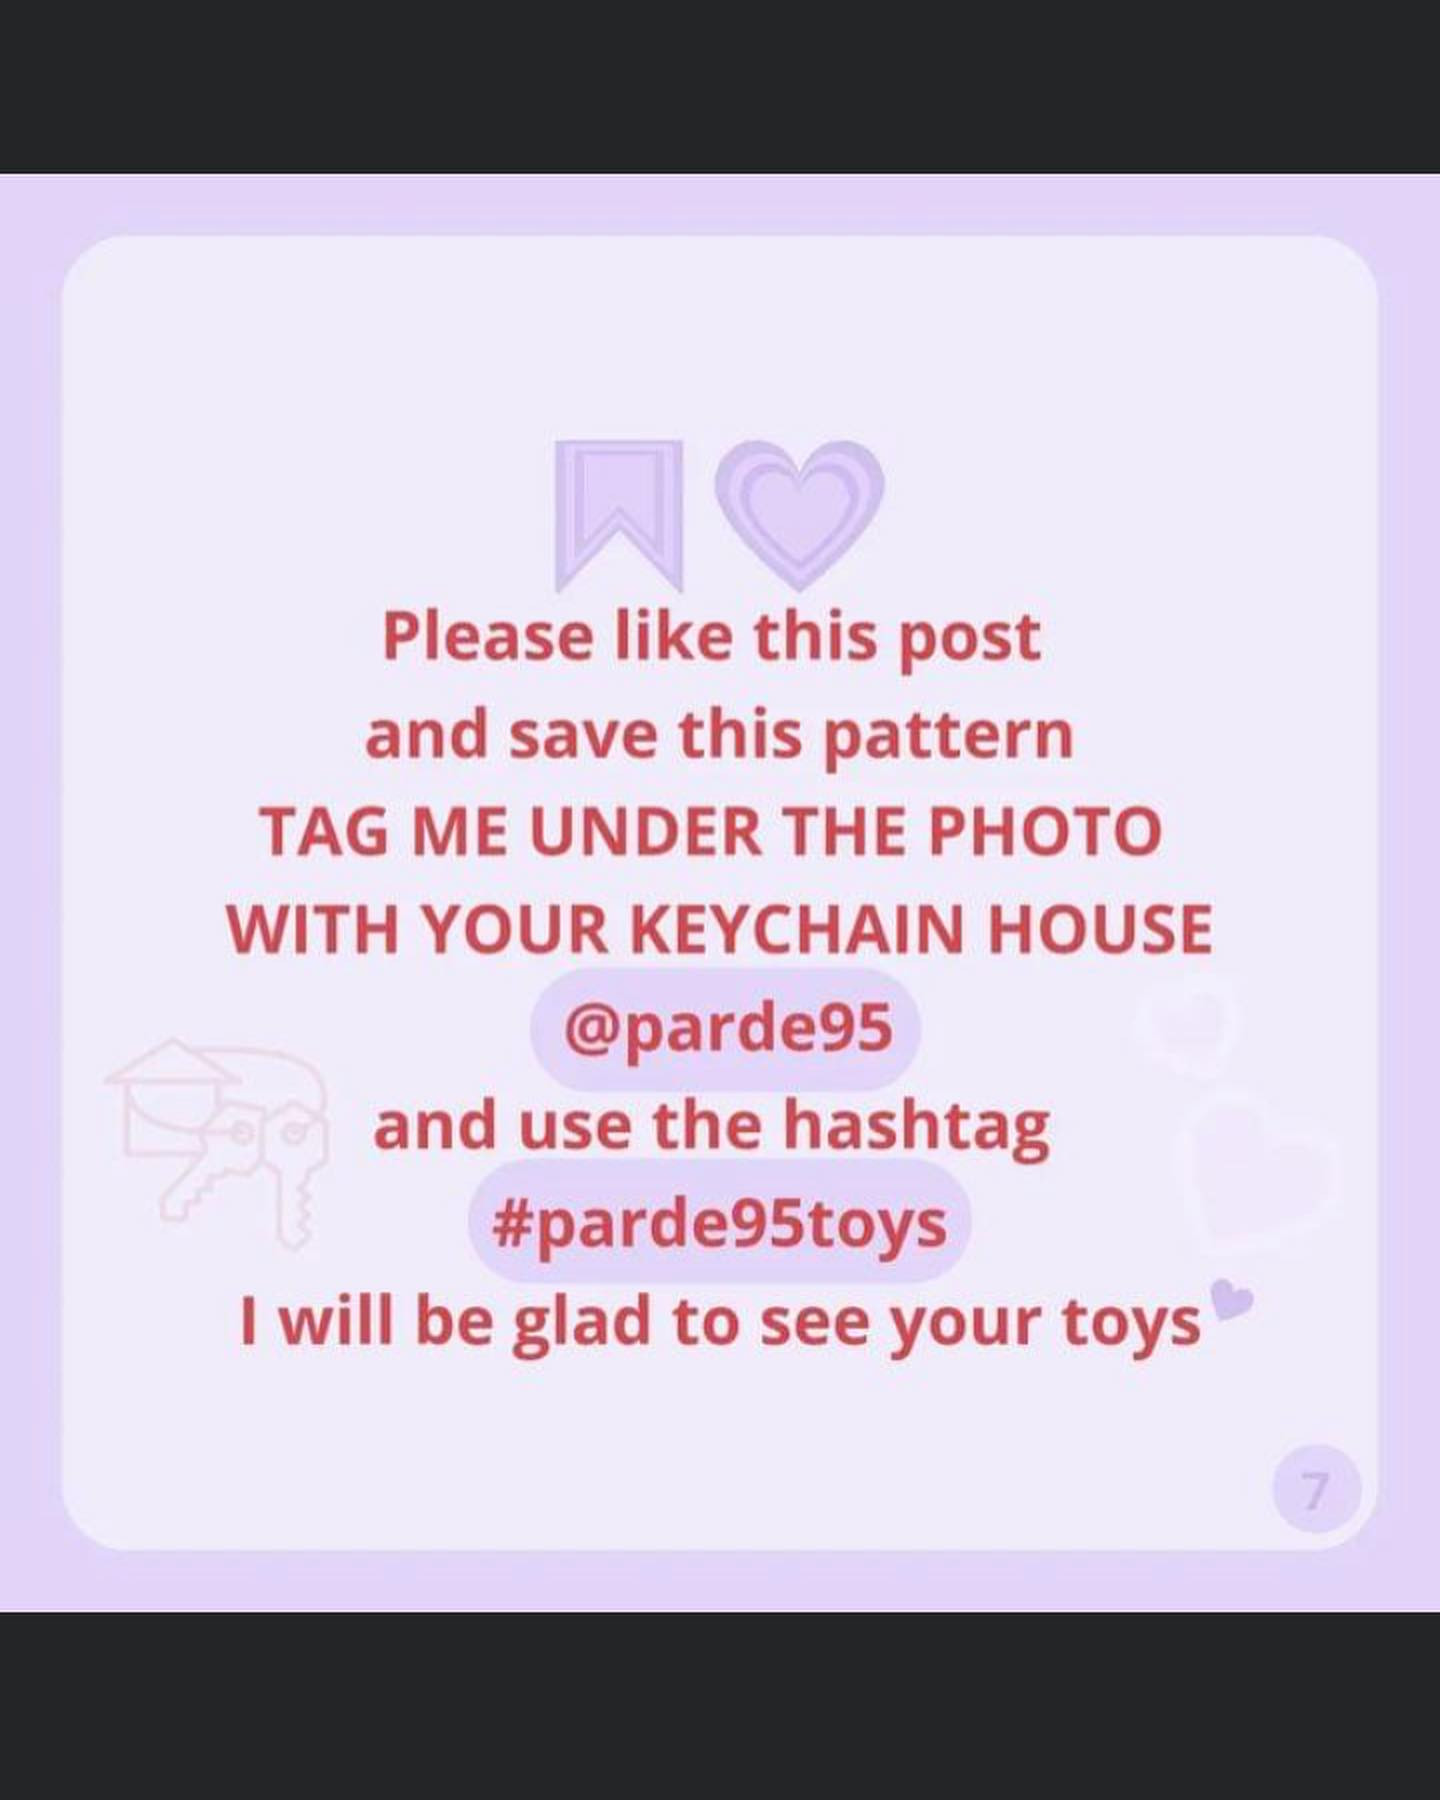 free pattern keychain house